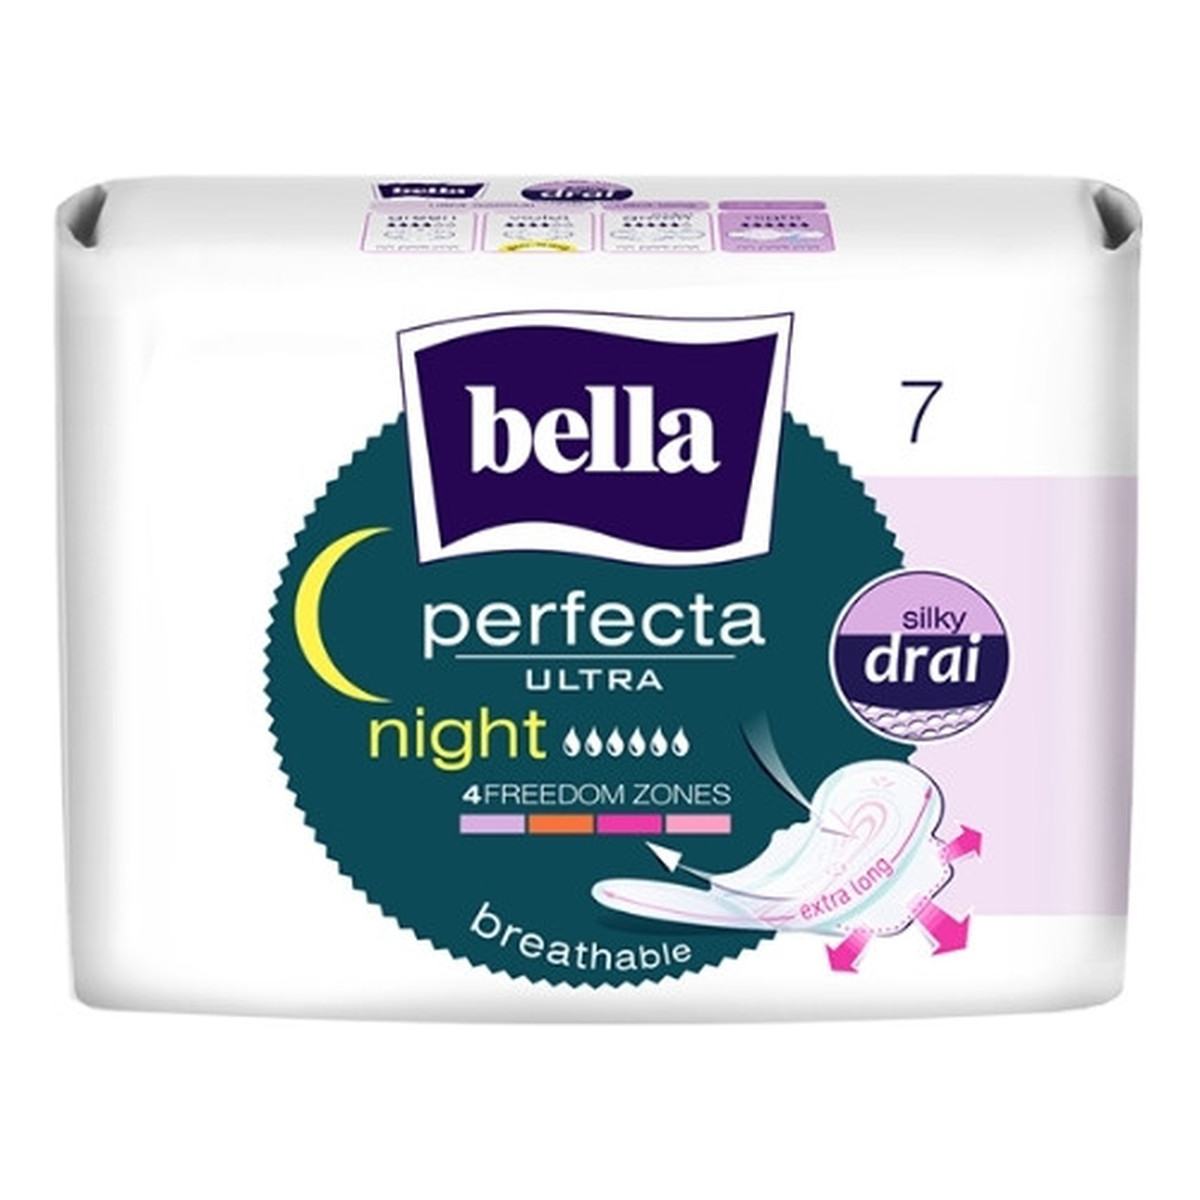 Bella Perfecta Ultra Night Silky Drai Podpaski higieniczne 7 sztuk